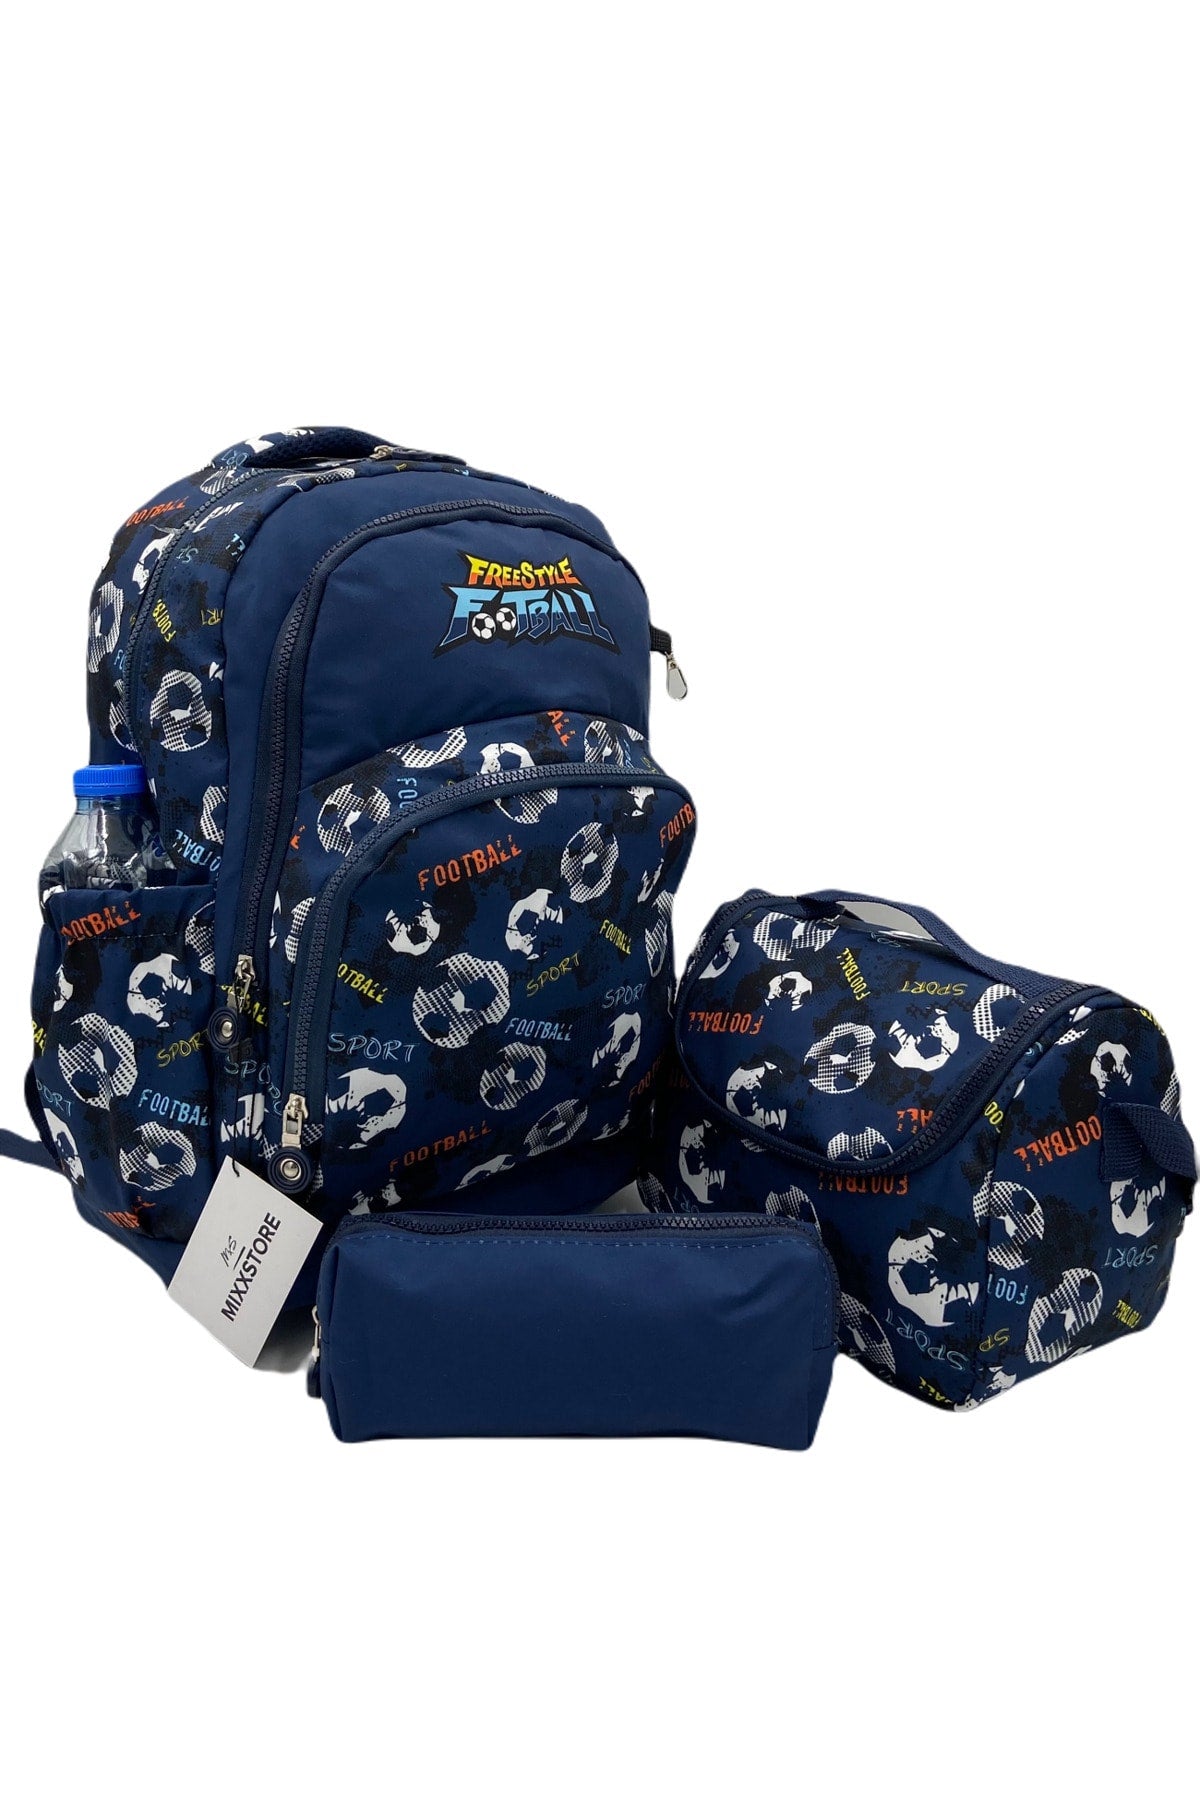 Begati Foil Fed Waterproof Fabric Orthopedic Kids Backpacks And First School Bag Set Football Pattern